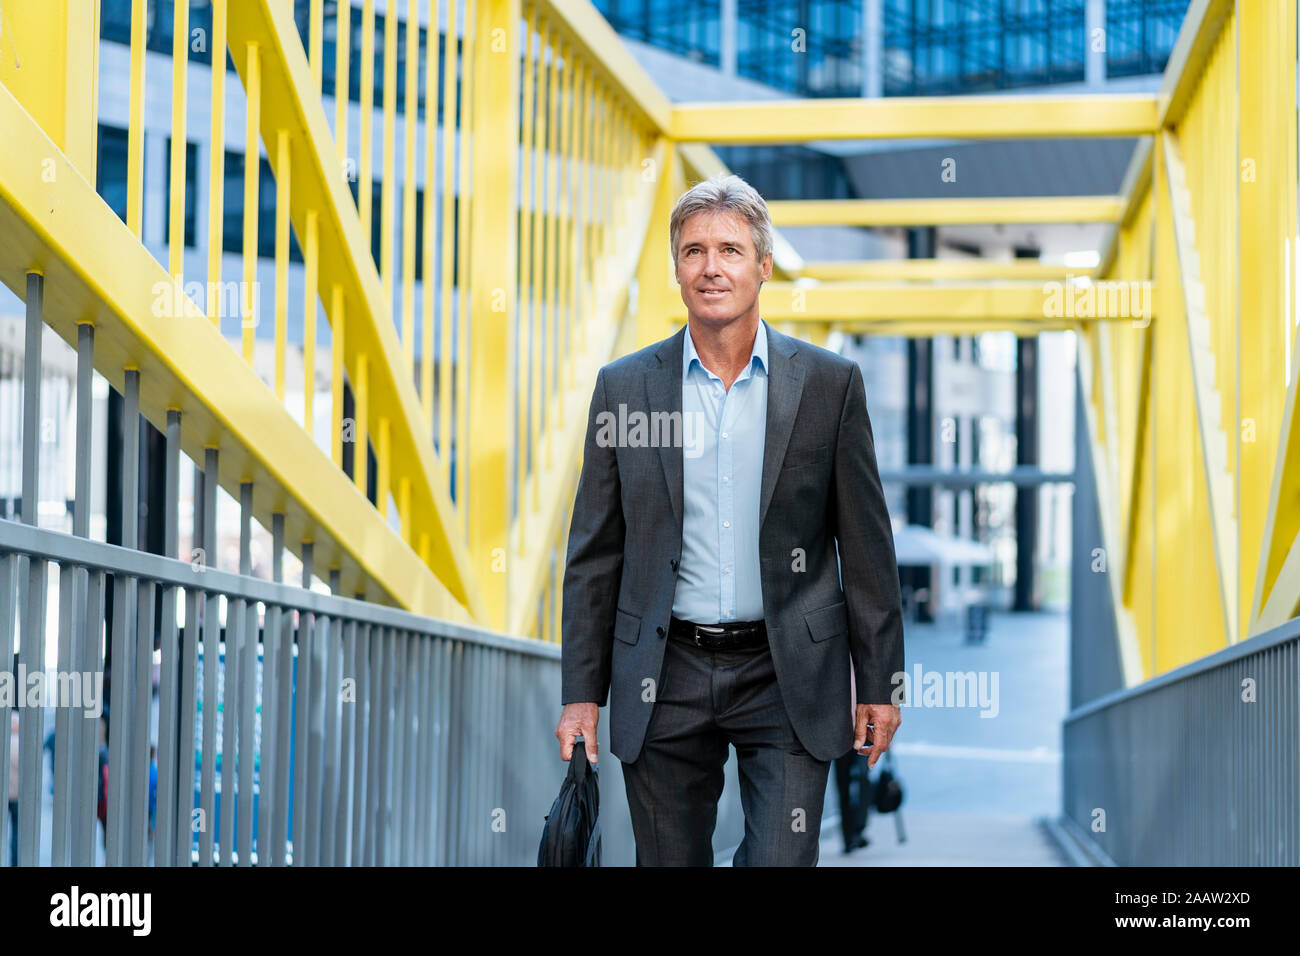 Mature businessman walking on a bridge Stock Photo